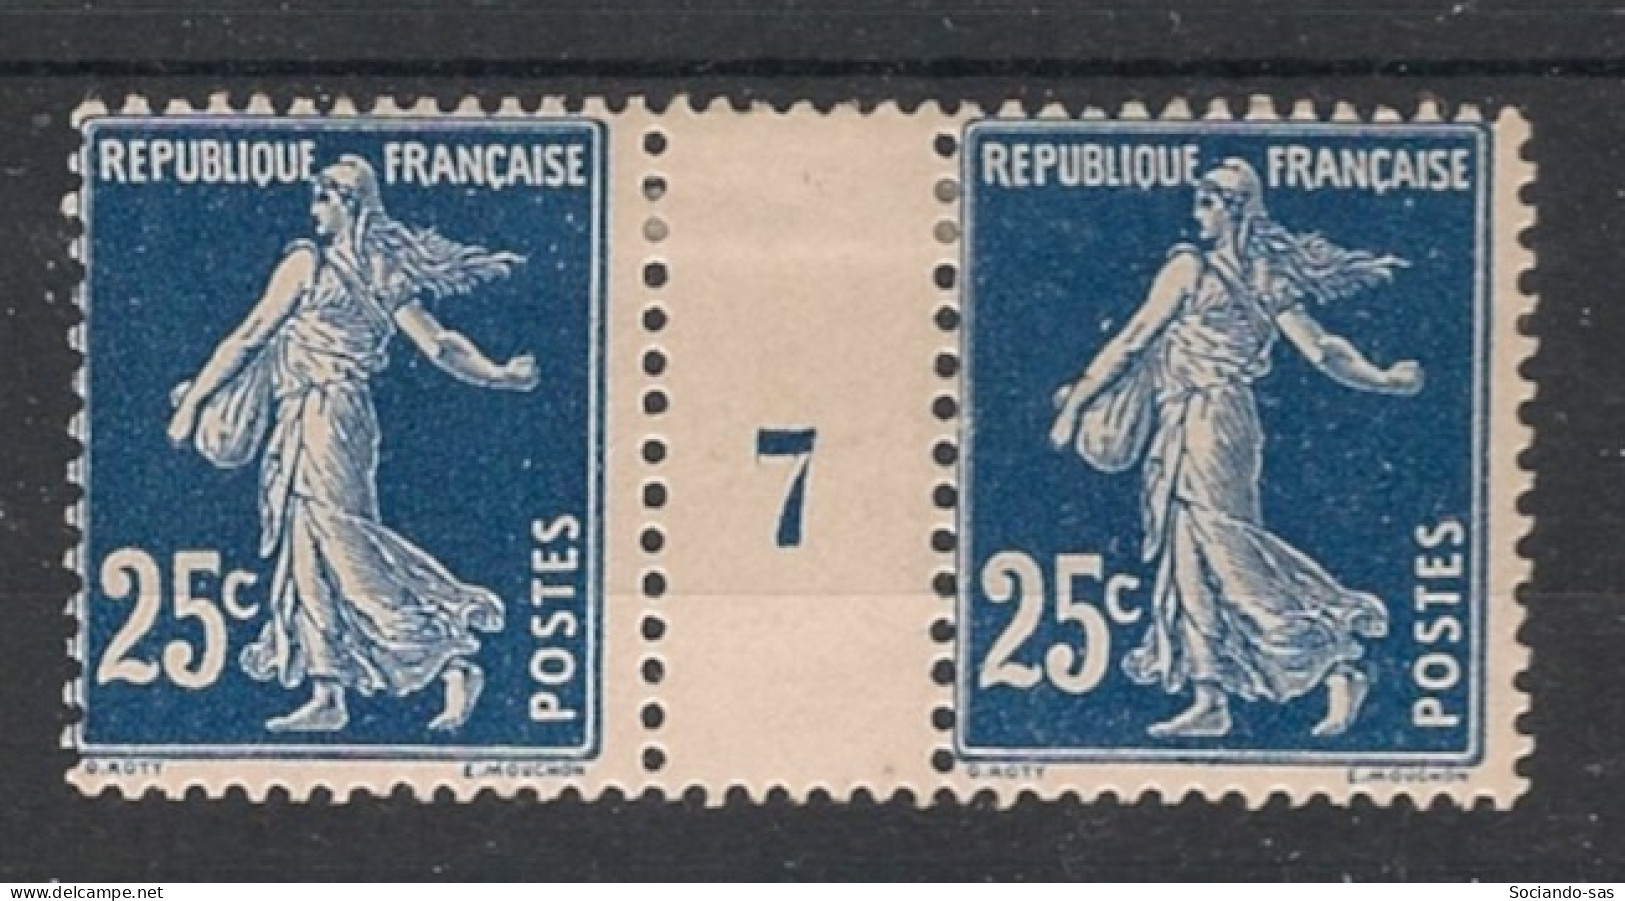 FRANCE - 1907 - N°YT. 140a - Type Semeuse Camée 25c Bleu Foncé - Paire Millésimée - Neuf * / MH VF - Millésimes